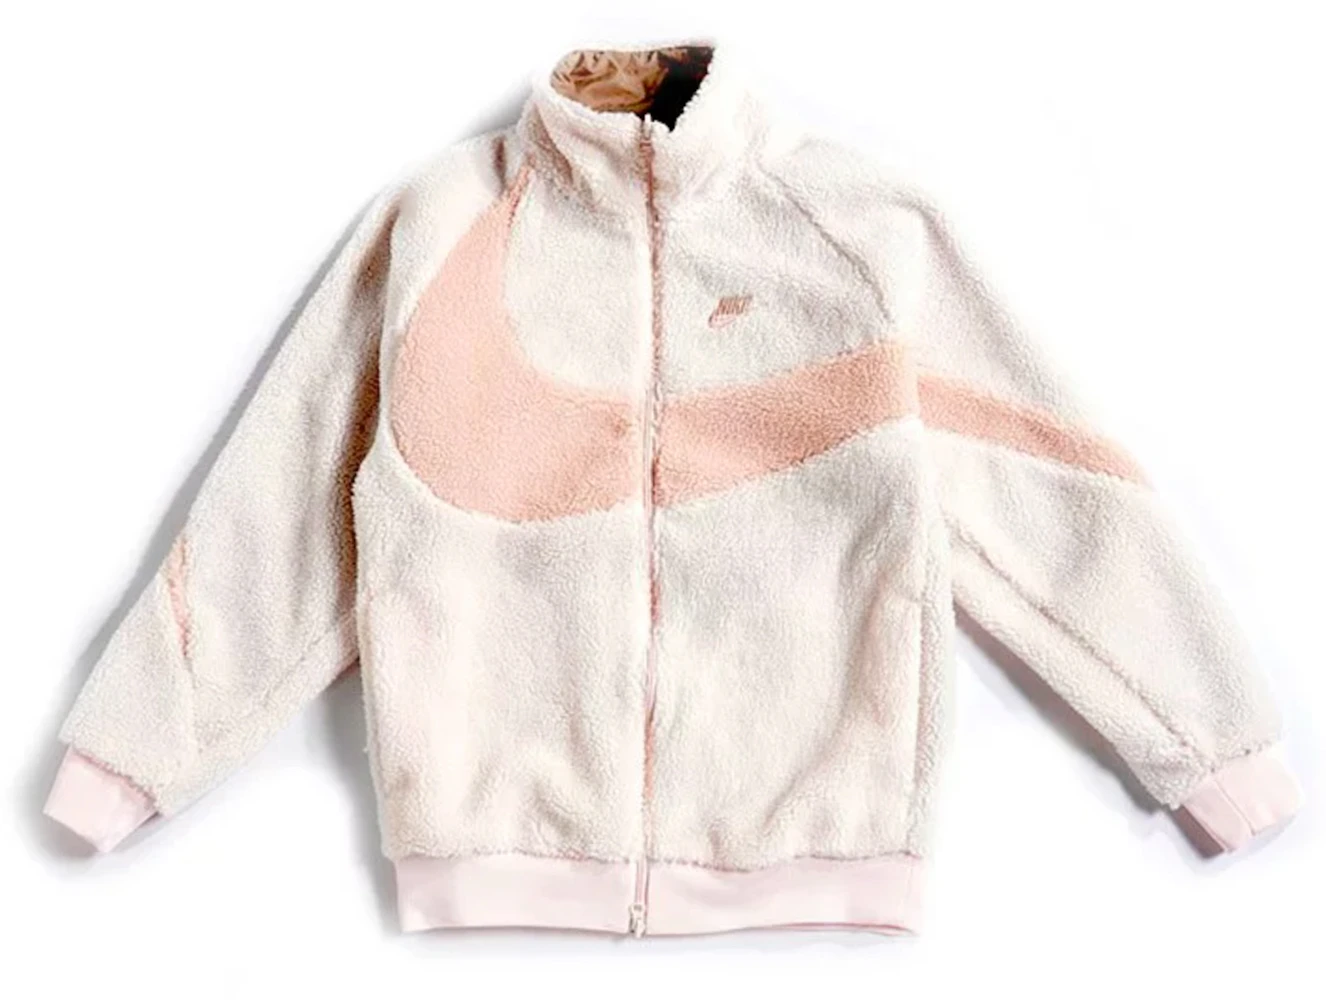 Tamano relativo piel nicotina Nike Big Swoosh Reversible Boa Jacket (Asia Sizing) Light Soft Pink - SS22  - ES